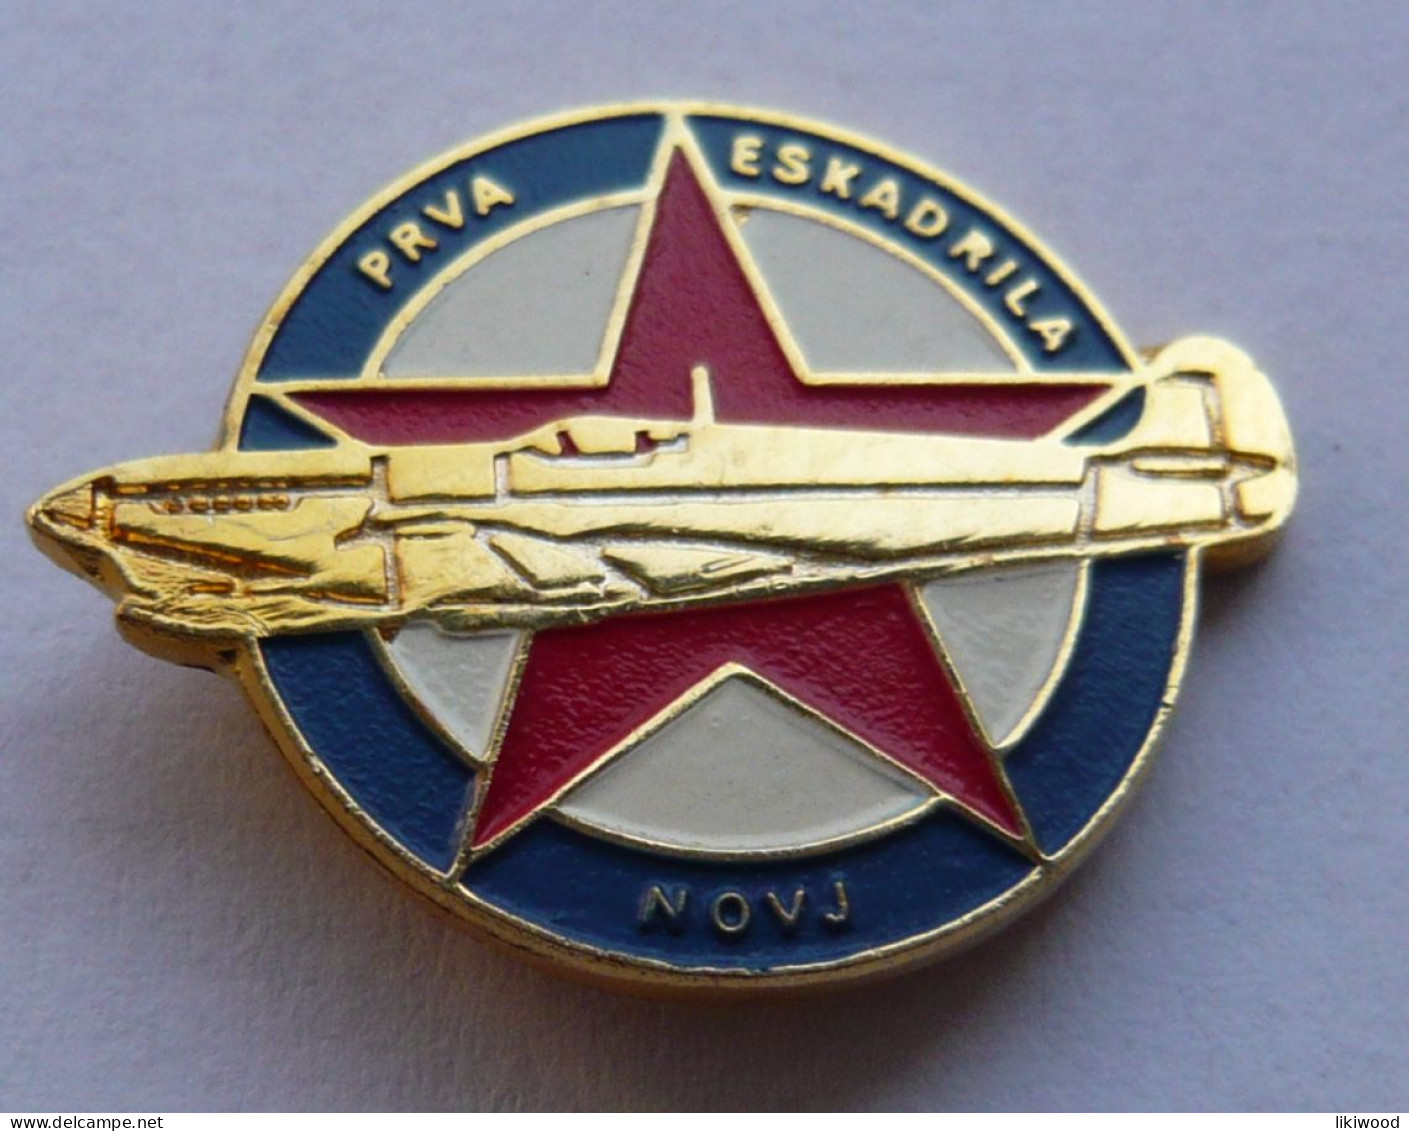 Prva eskadrila NOVJ - The first squadron - Narodnooslobodilačka vojska Jugoslavije - National Liberation Army of Yugosla